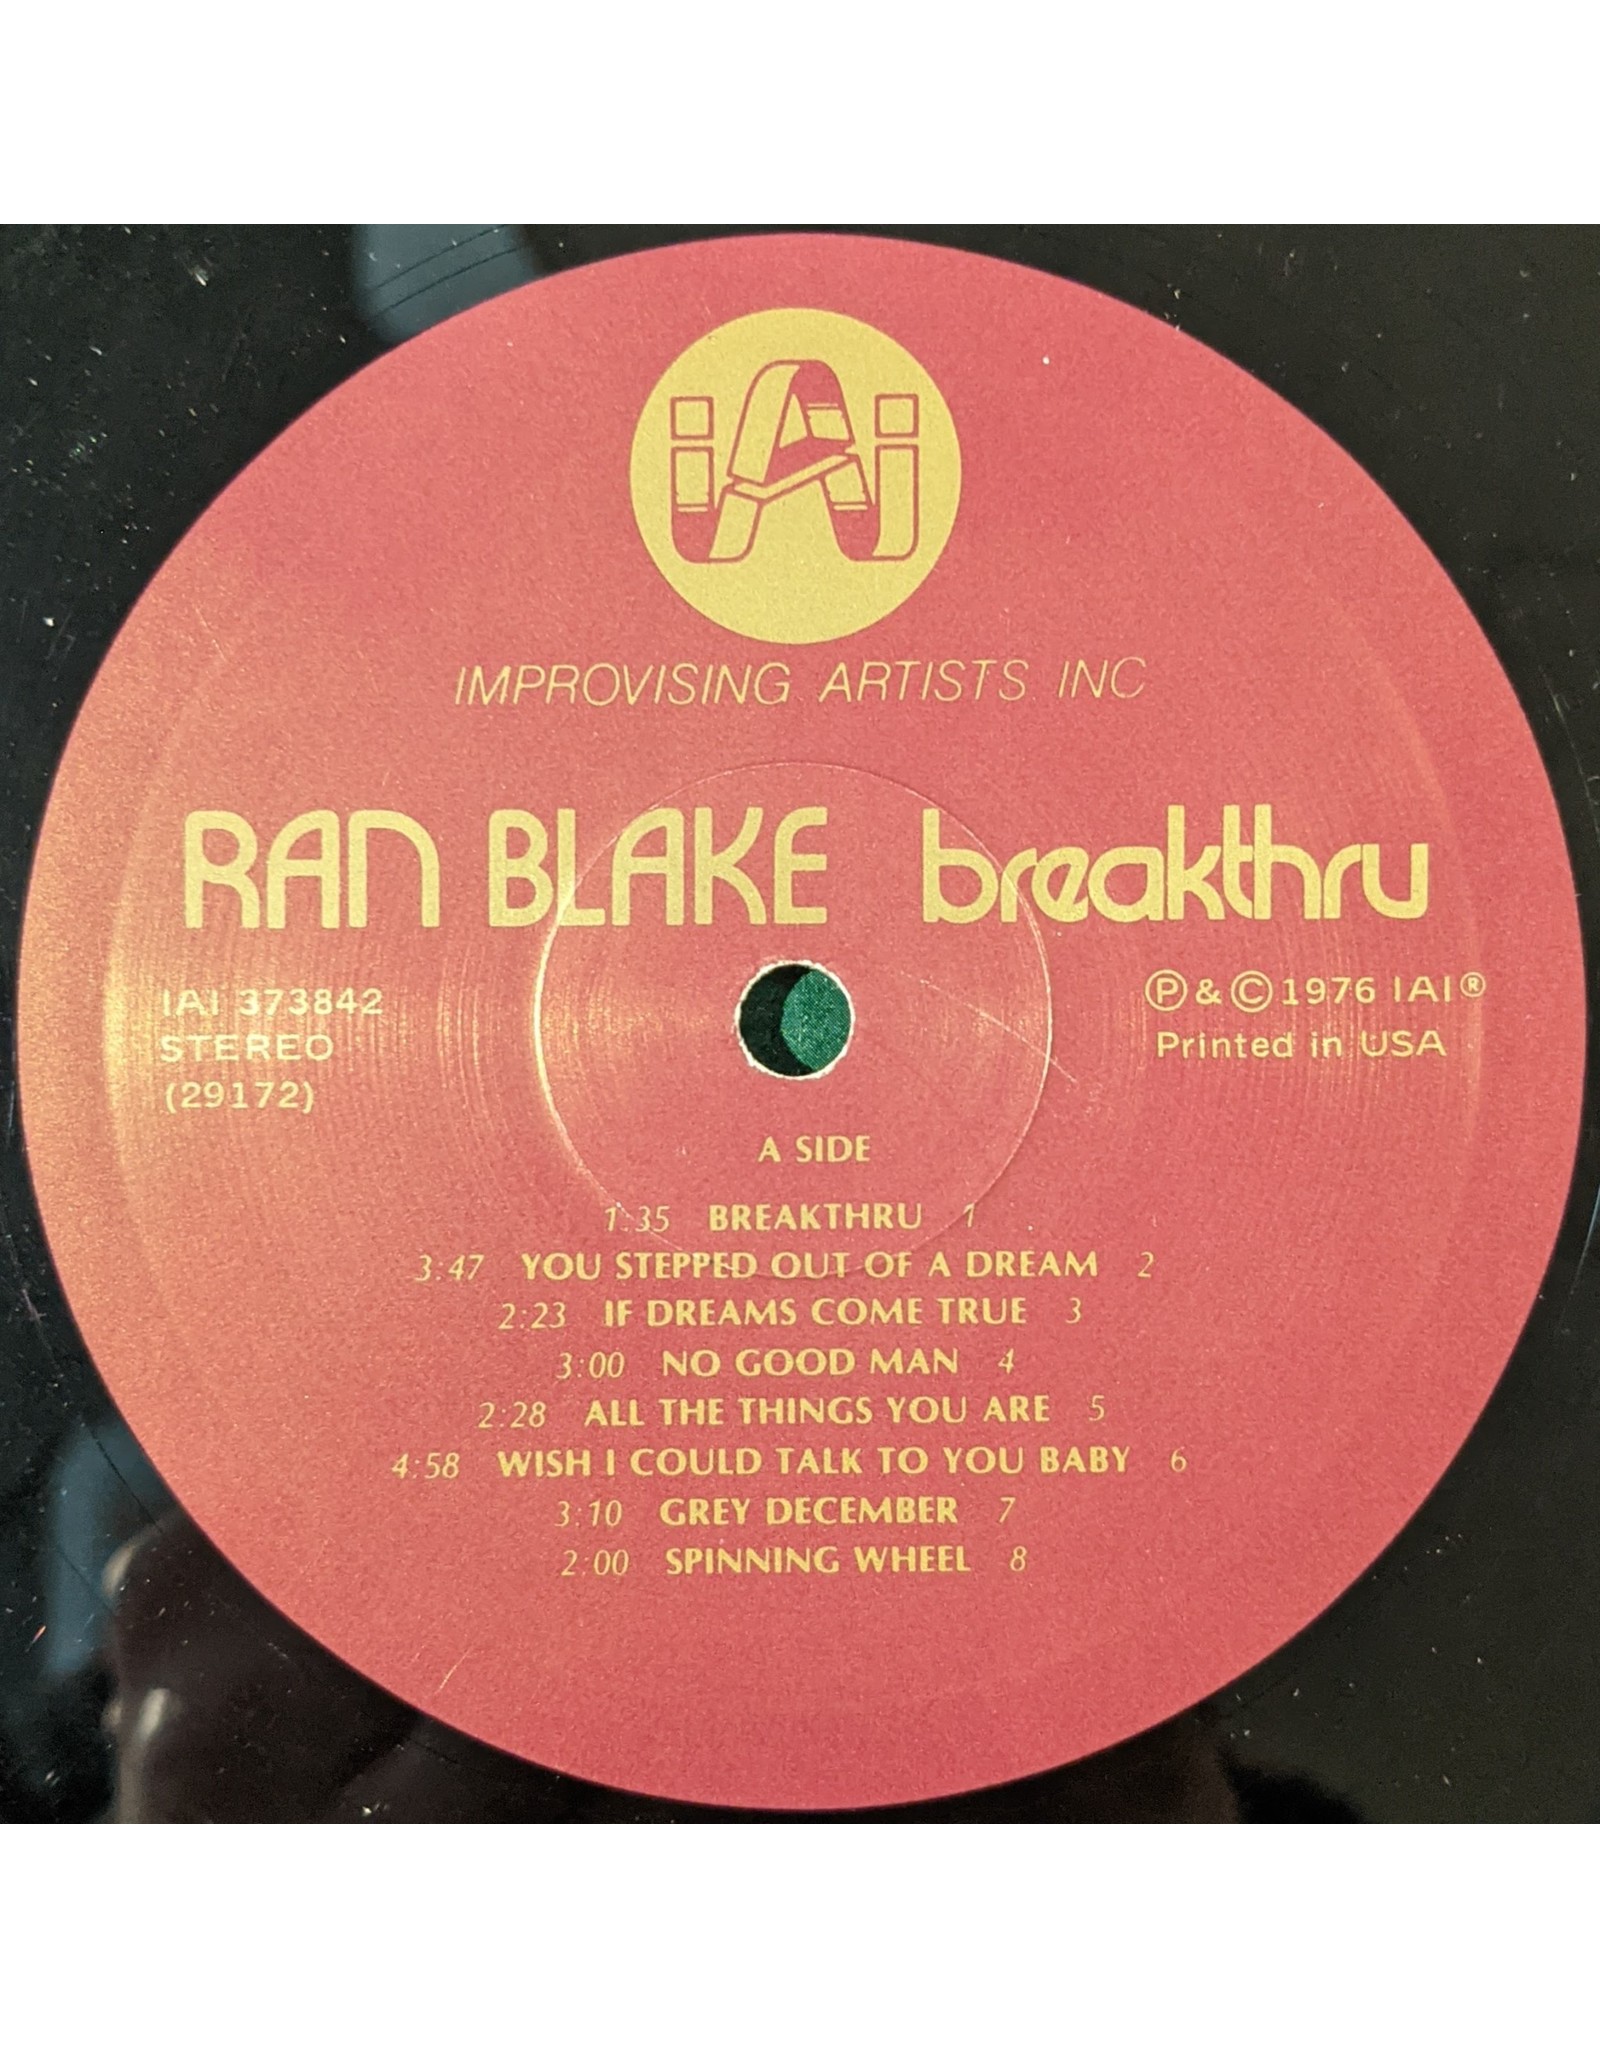 USED: Ran Blake: Breakthru LP